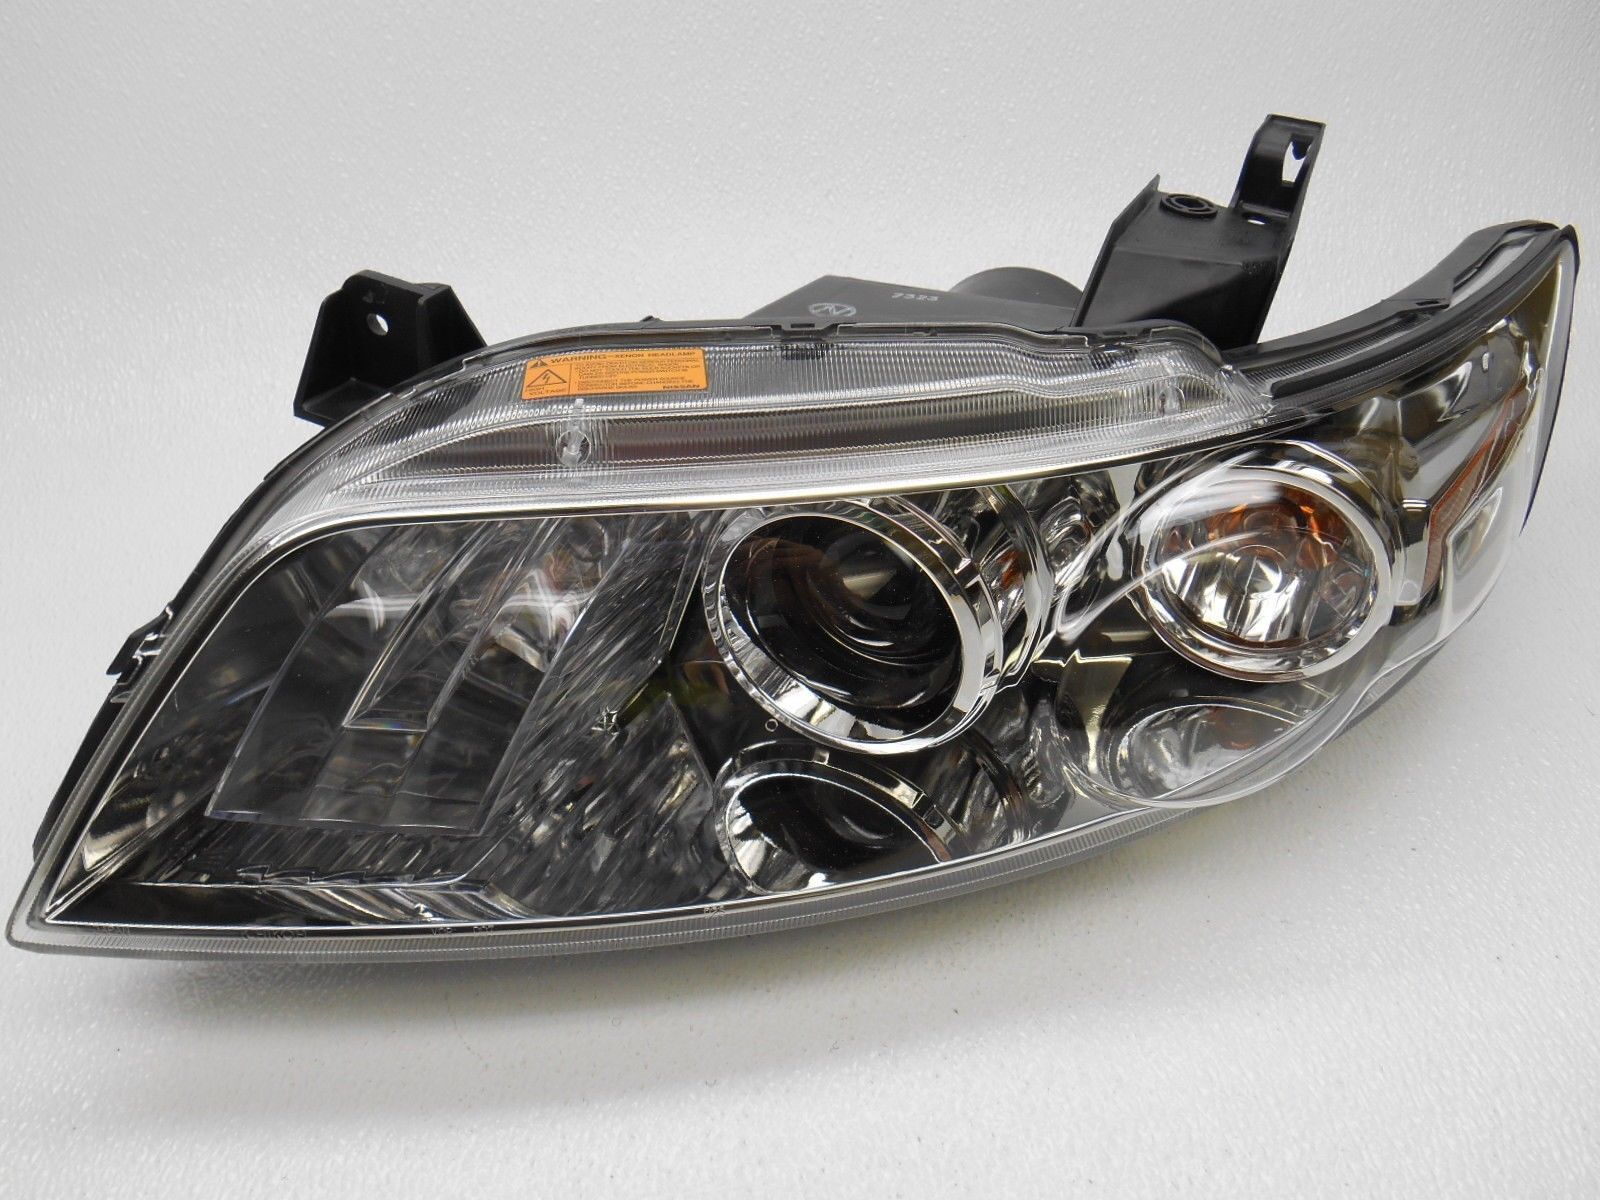 Brand OEM Infiniti FX35 FX45 Left Side HID Headlight Without Ballast